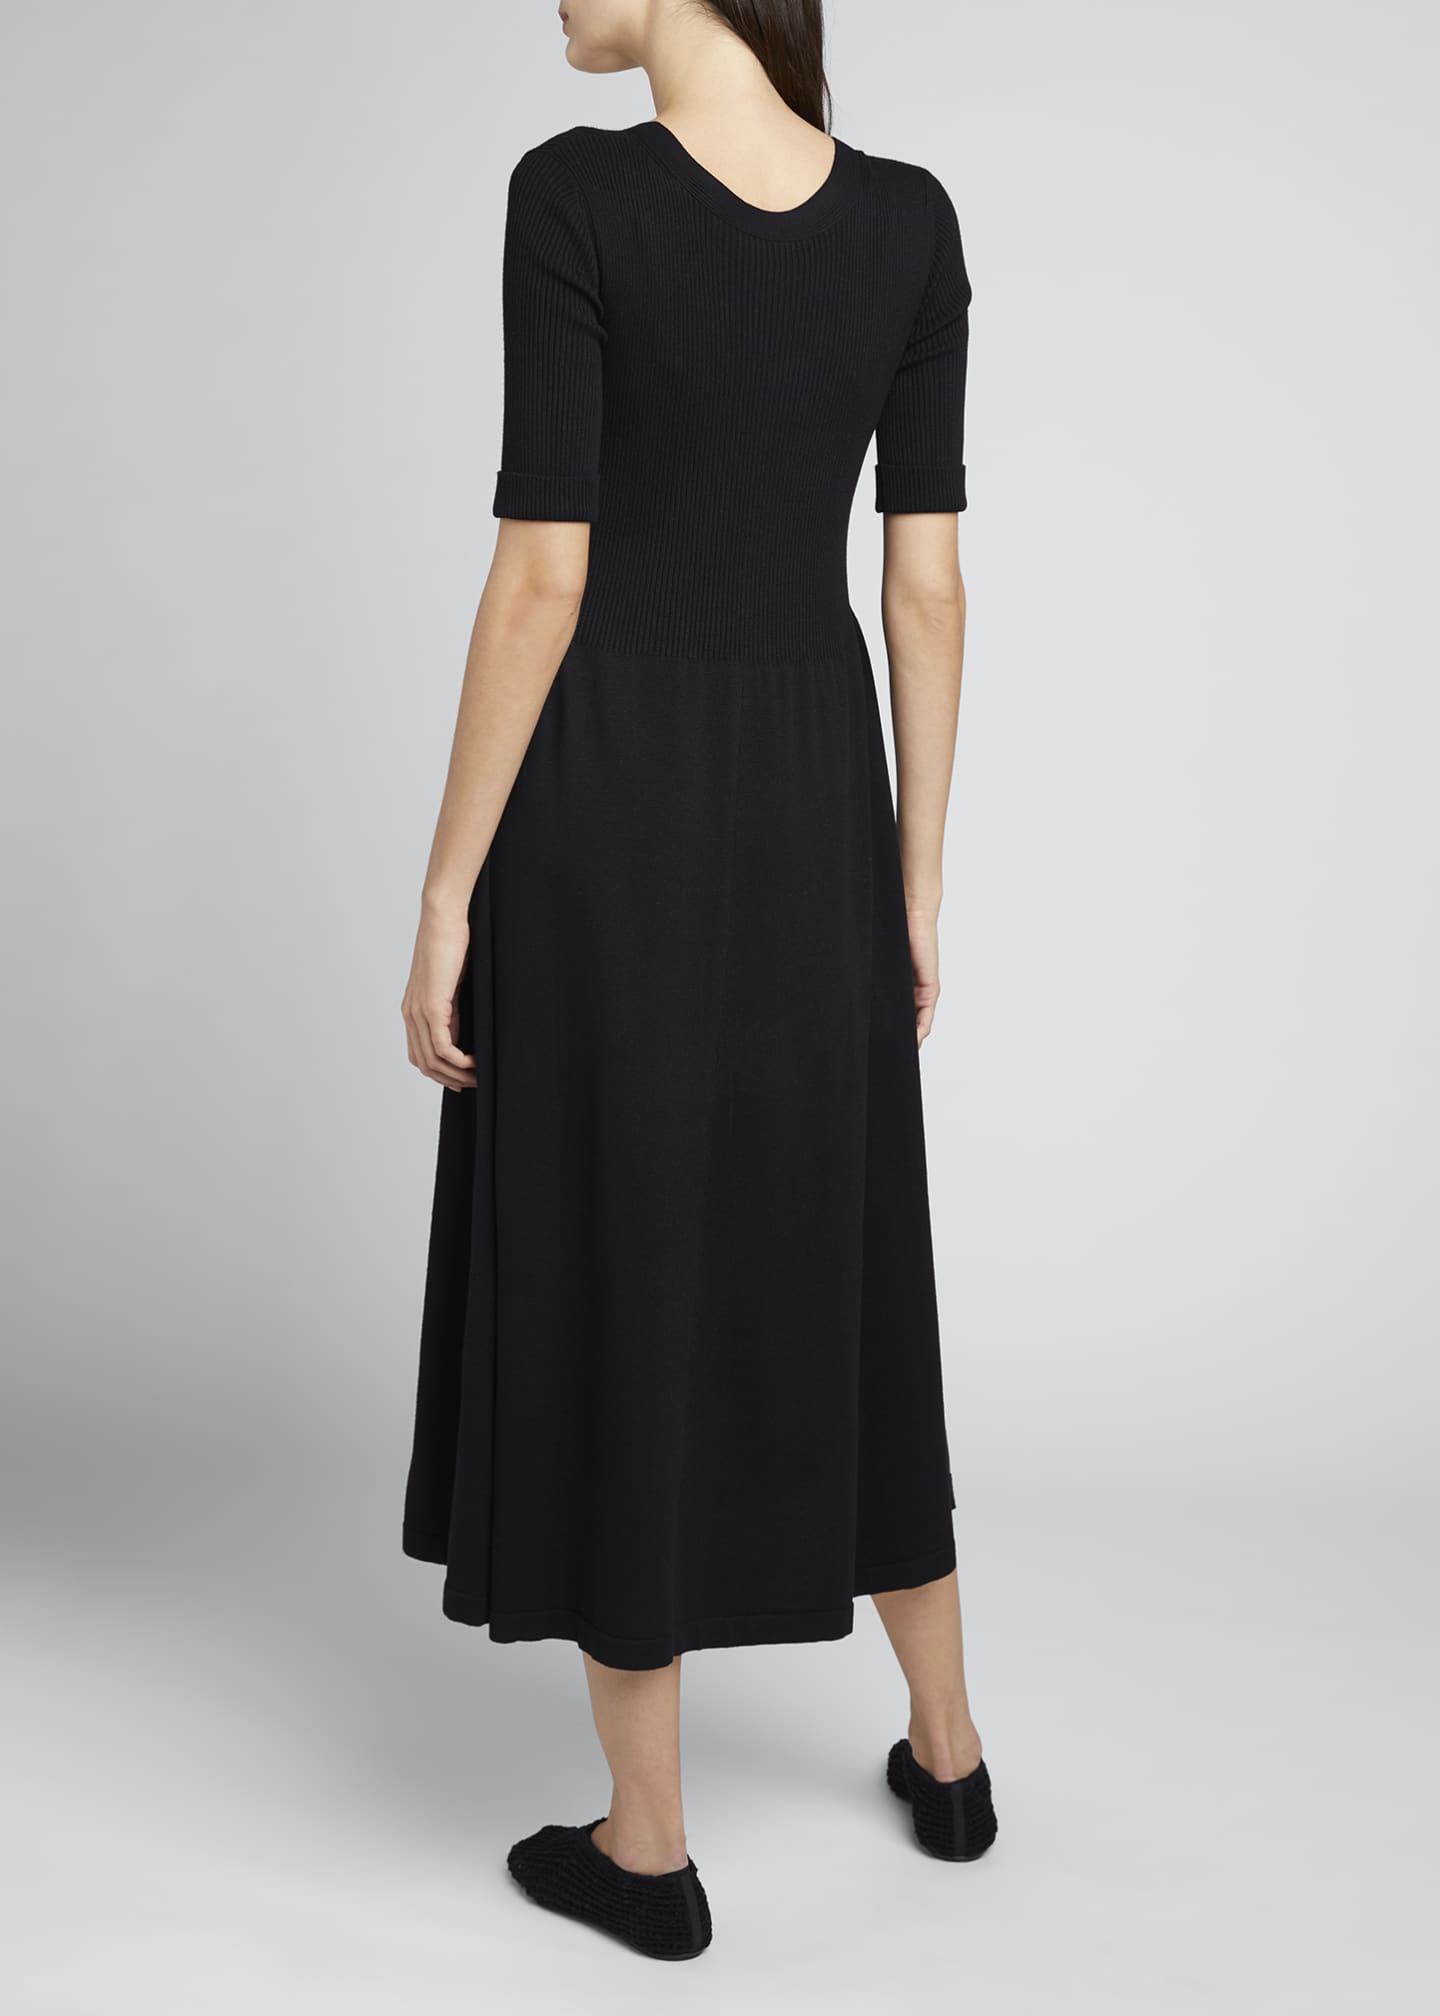 THE ROW Zakaria Jersey 3/4-Sleeve Dress - Bergdorf Goodman